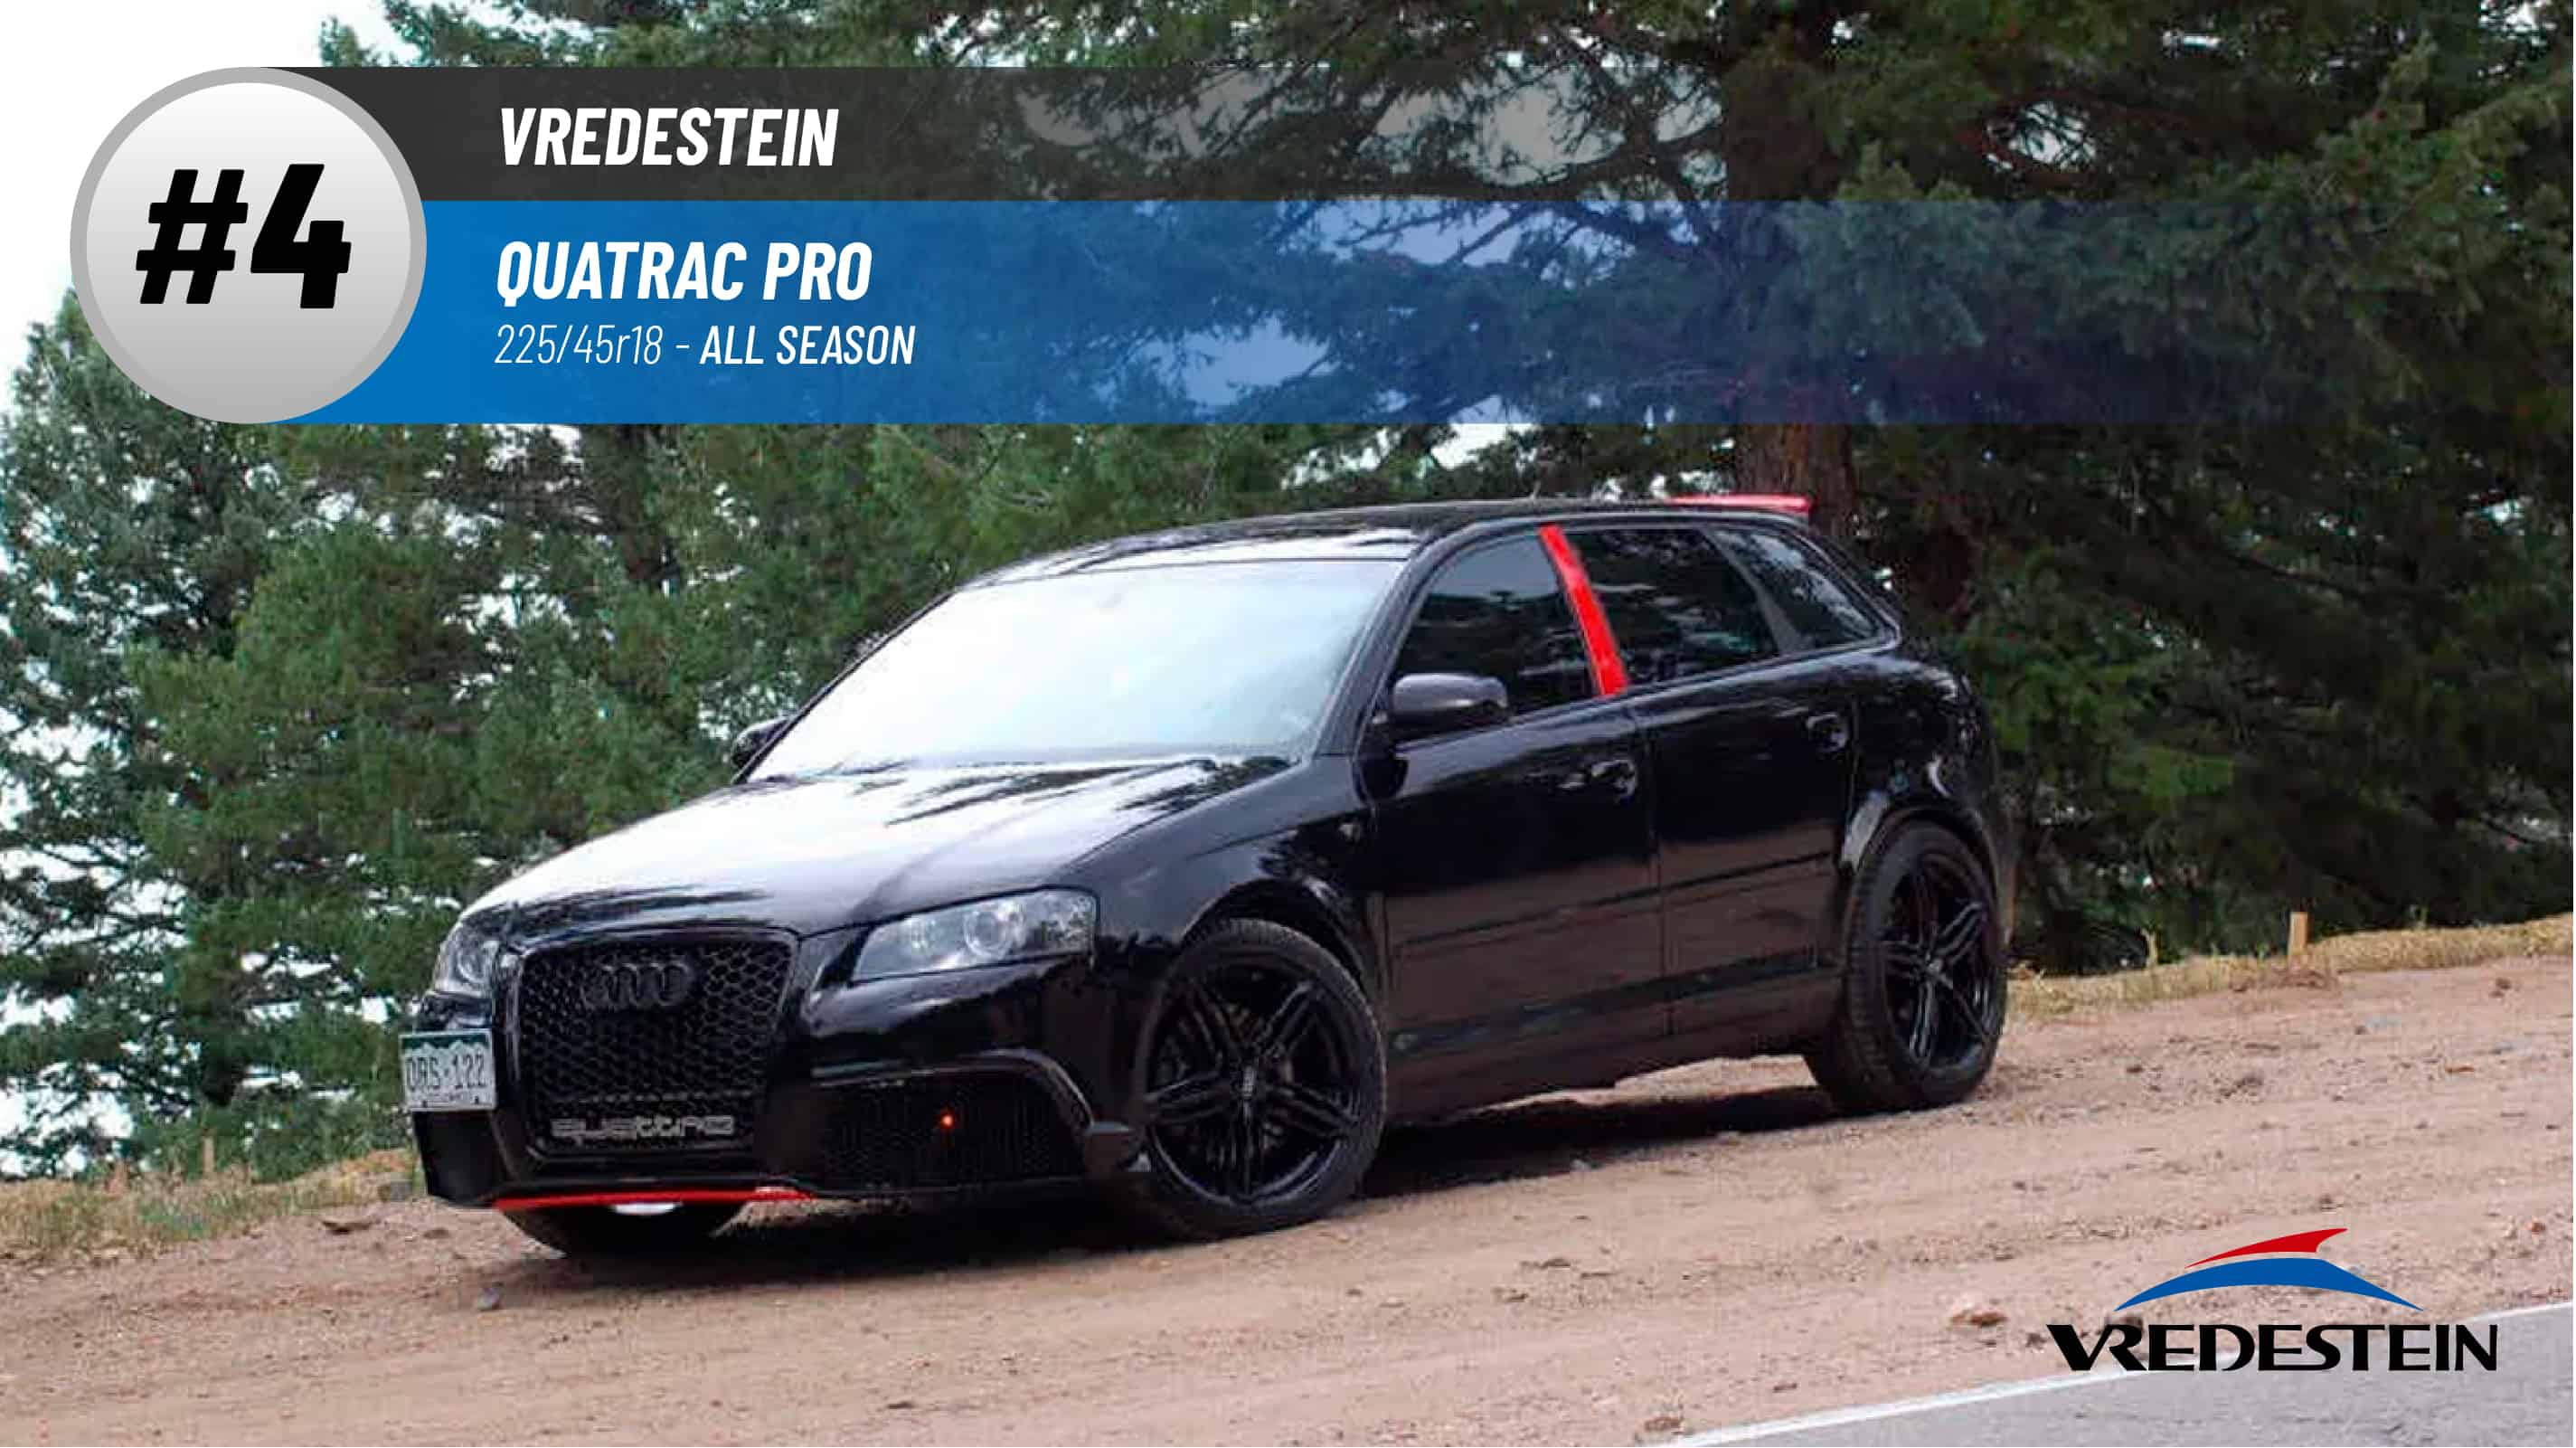 Top #4 All Season Tires: Vredestein Quatrac PRO – best 225/45r18